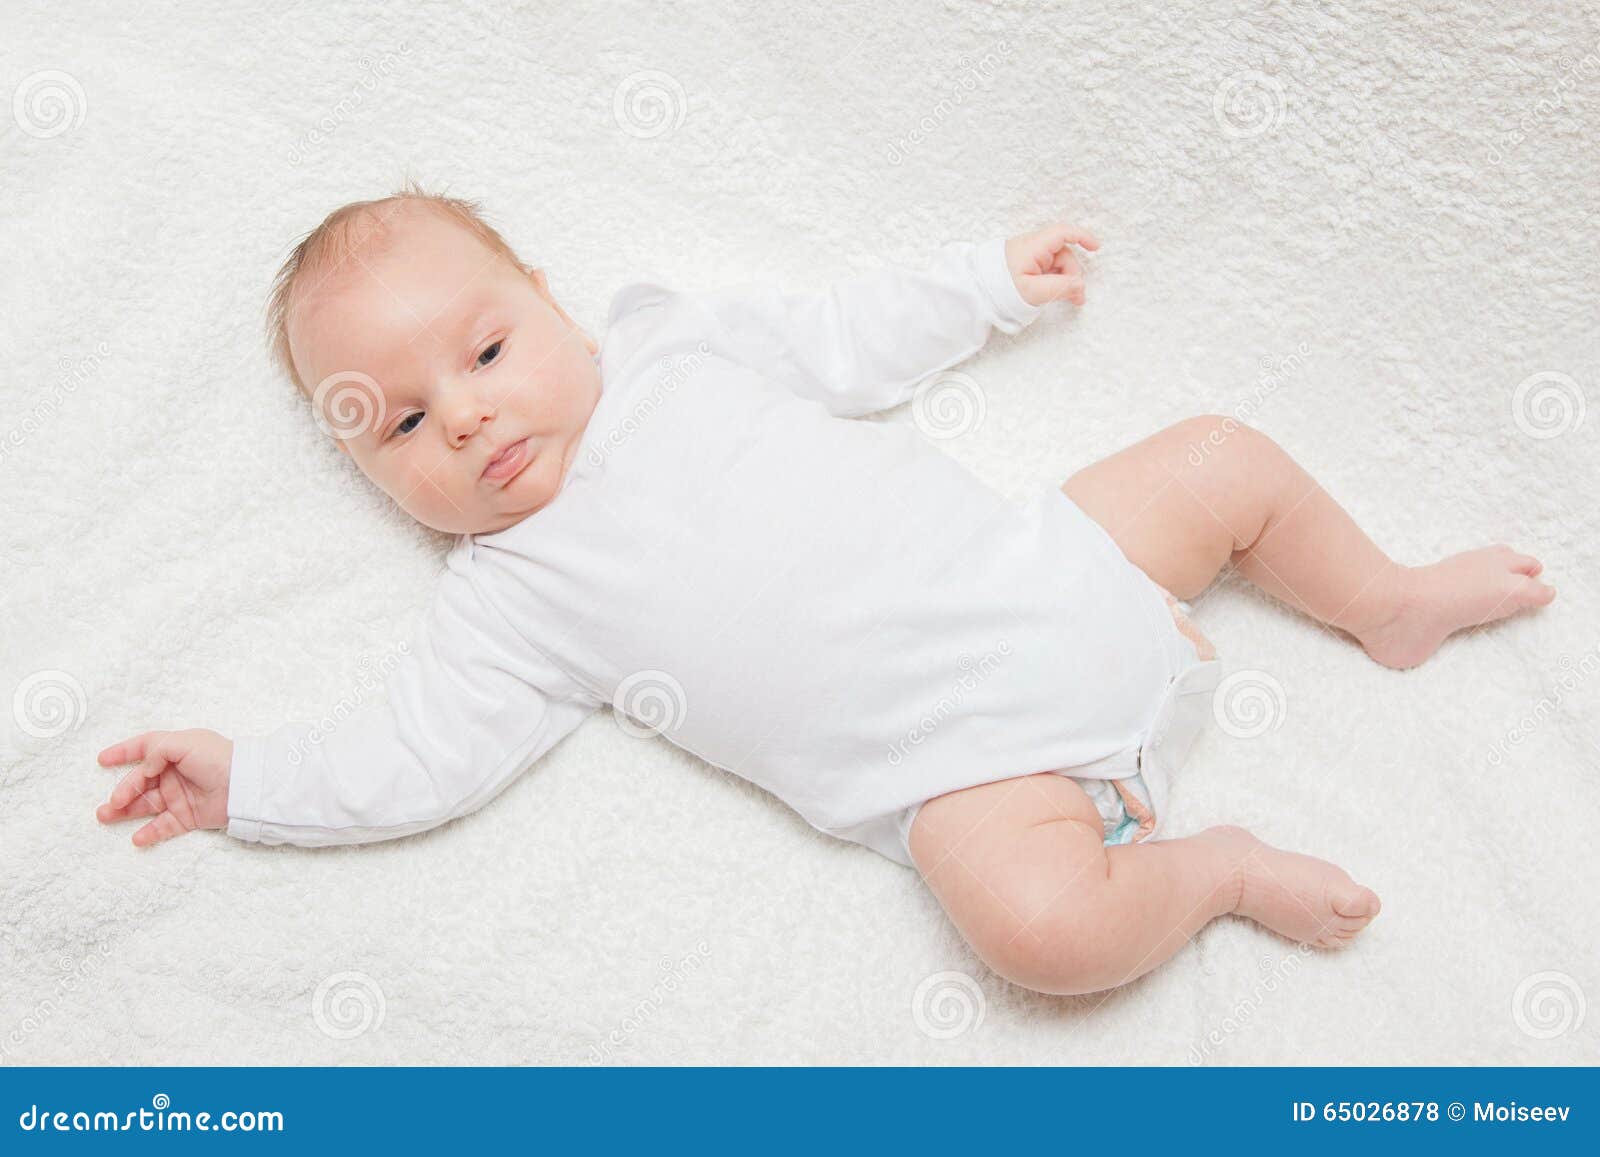 newborn baby in white romper